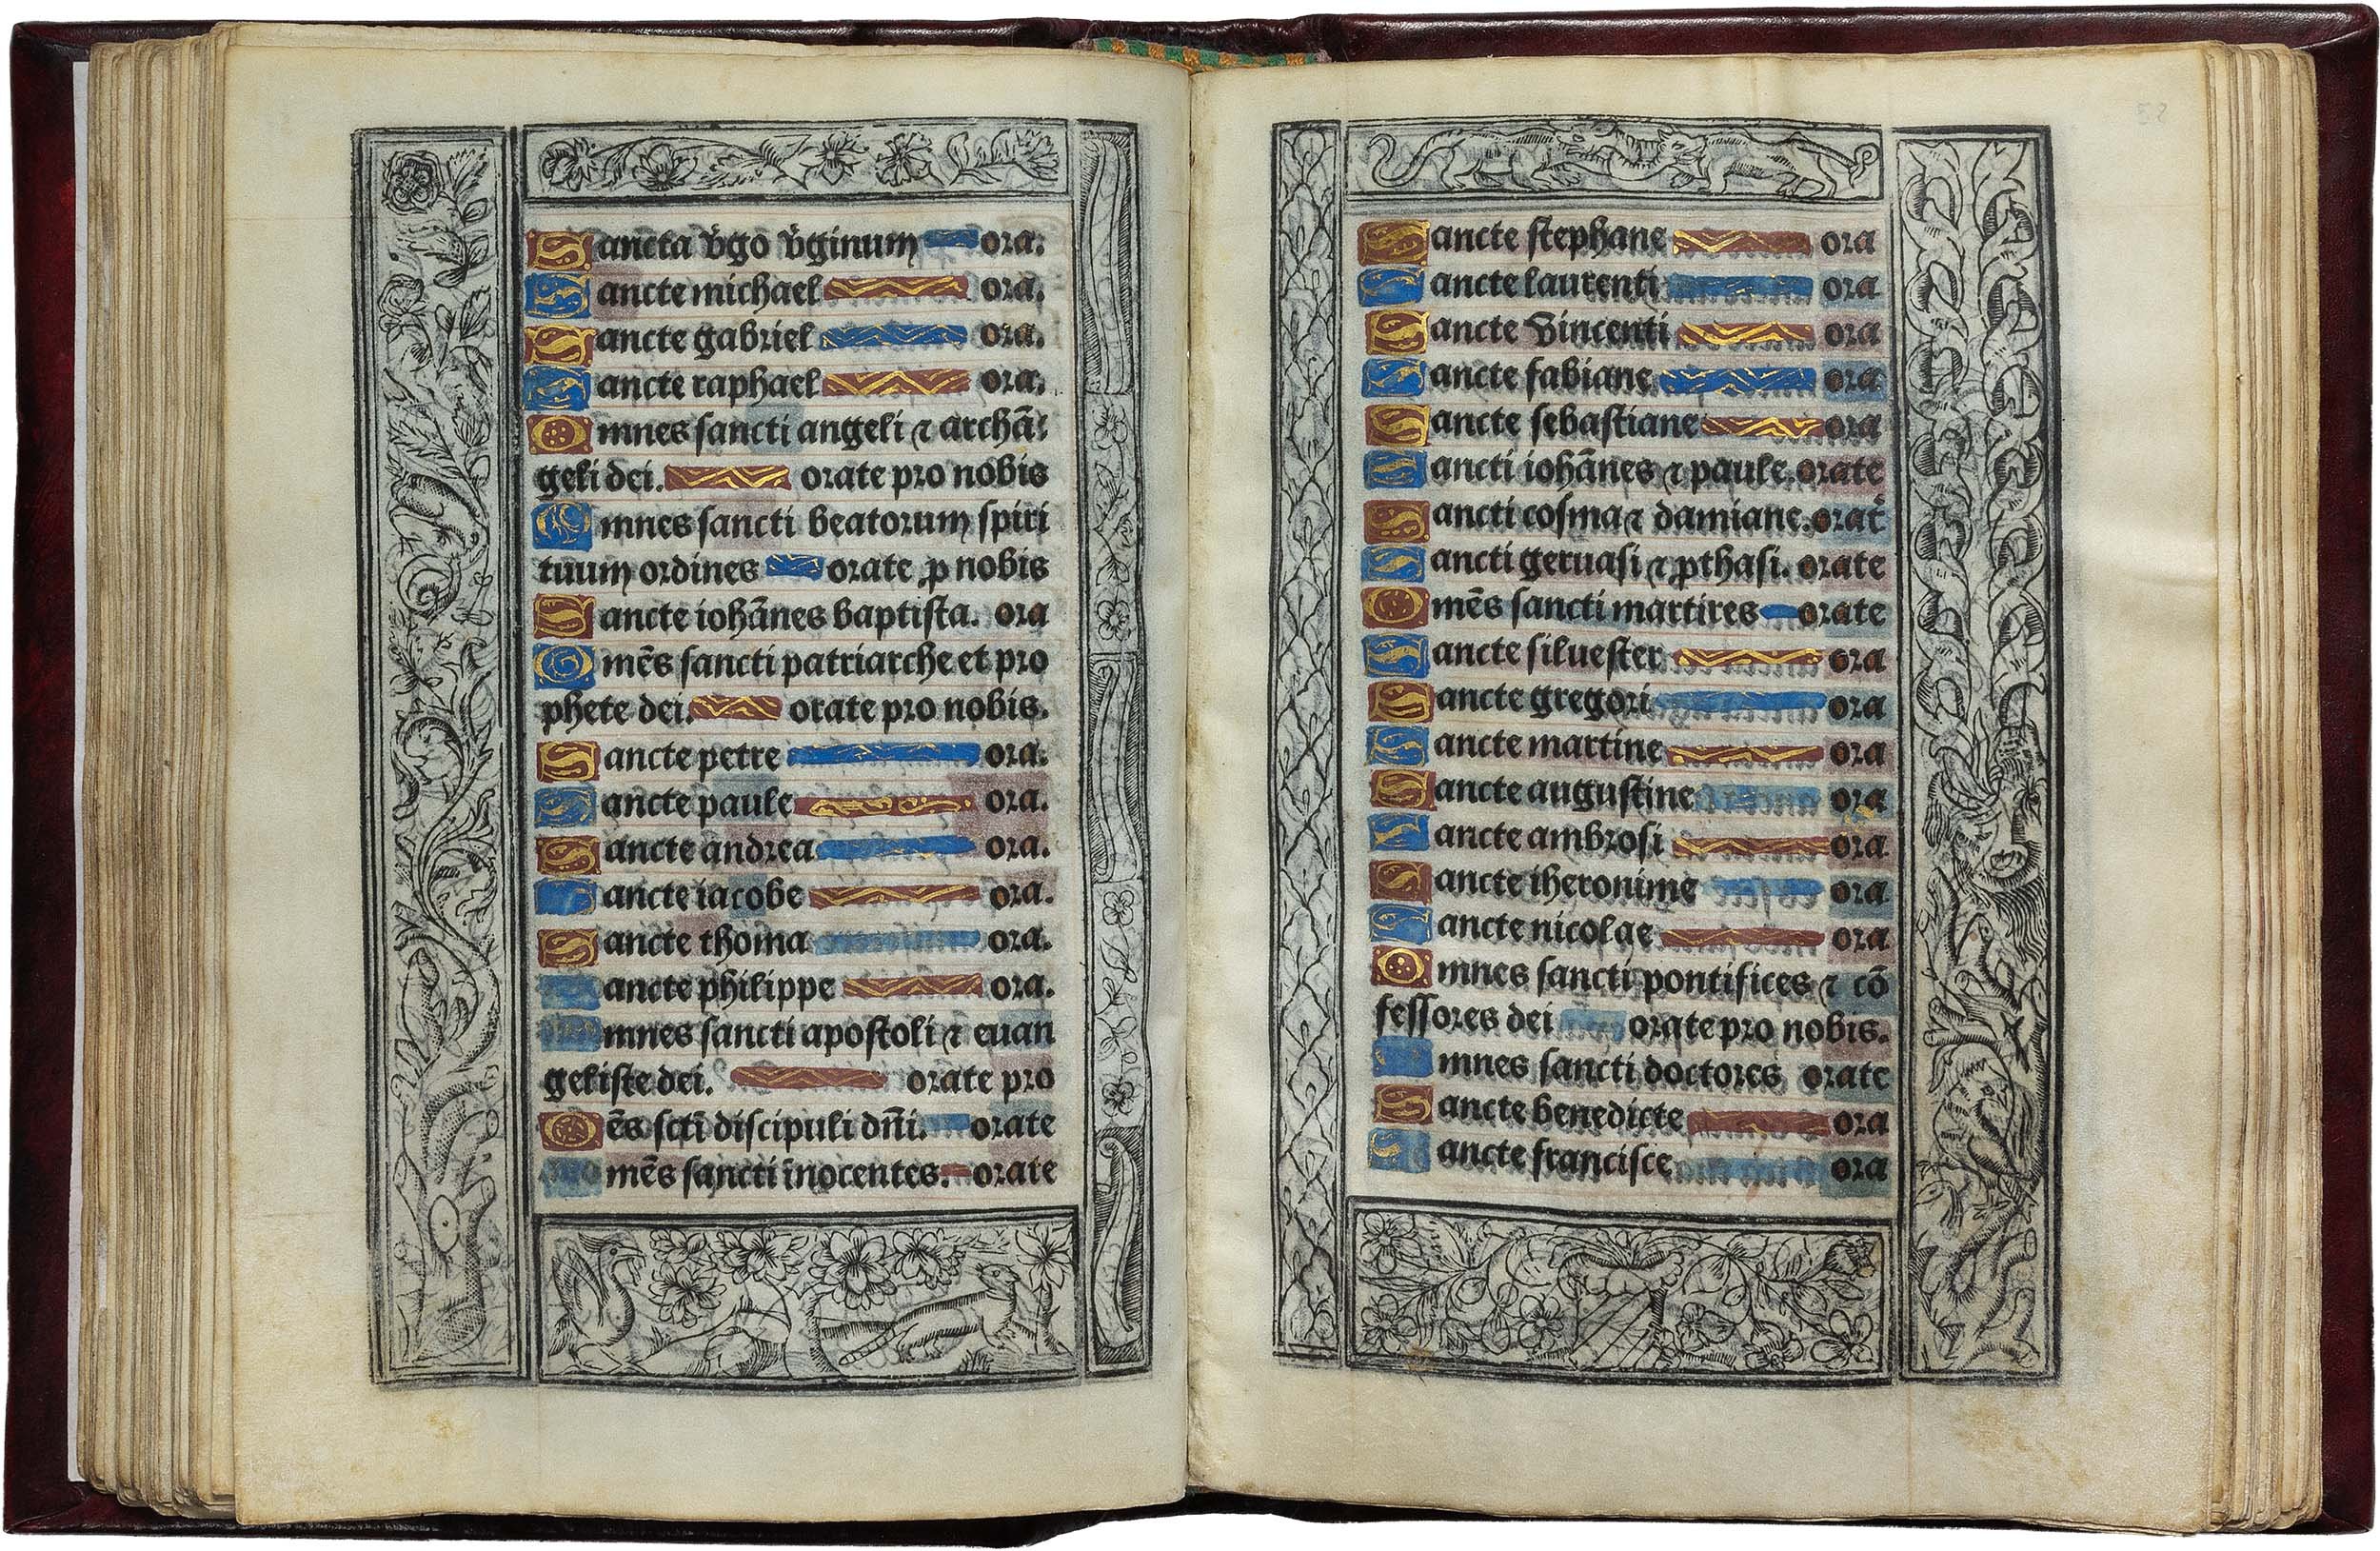 horae-bmv-early-printed-book-of-hours-1487-dupre-59.jpg